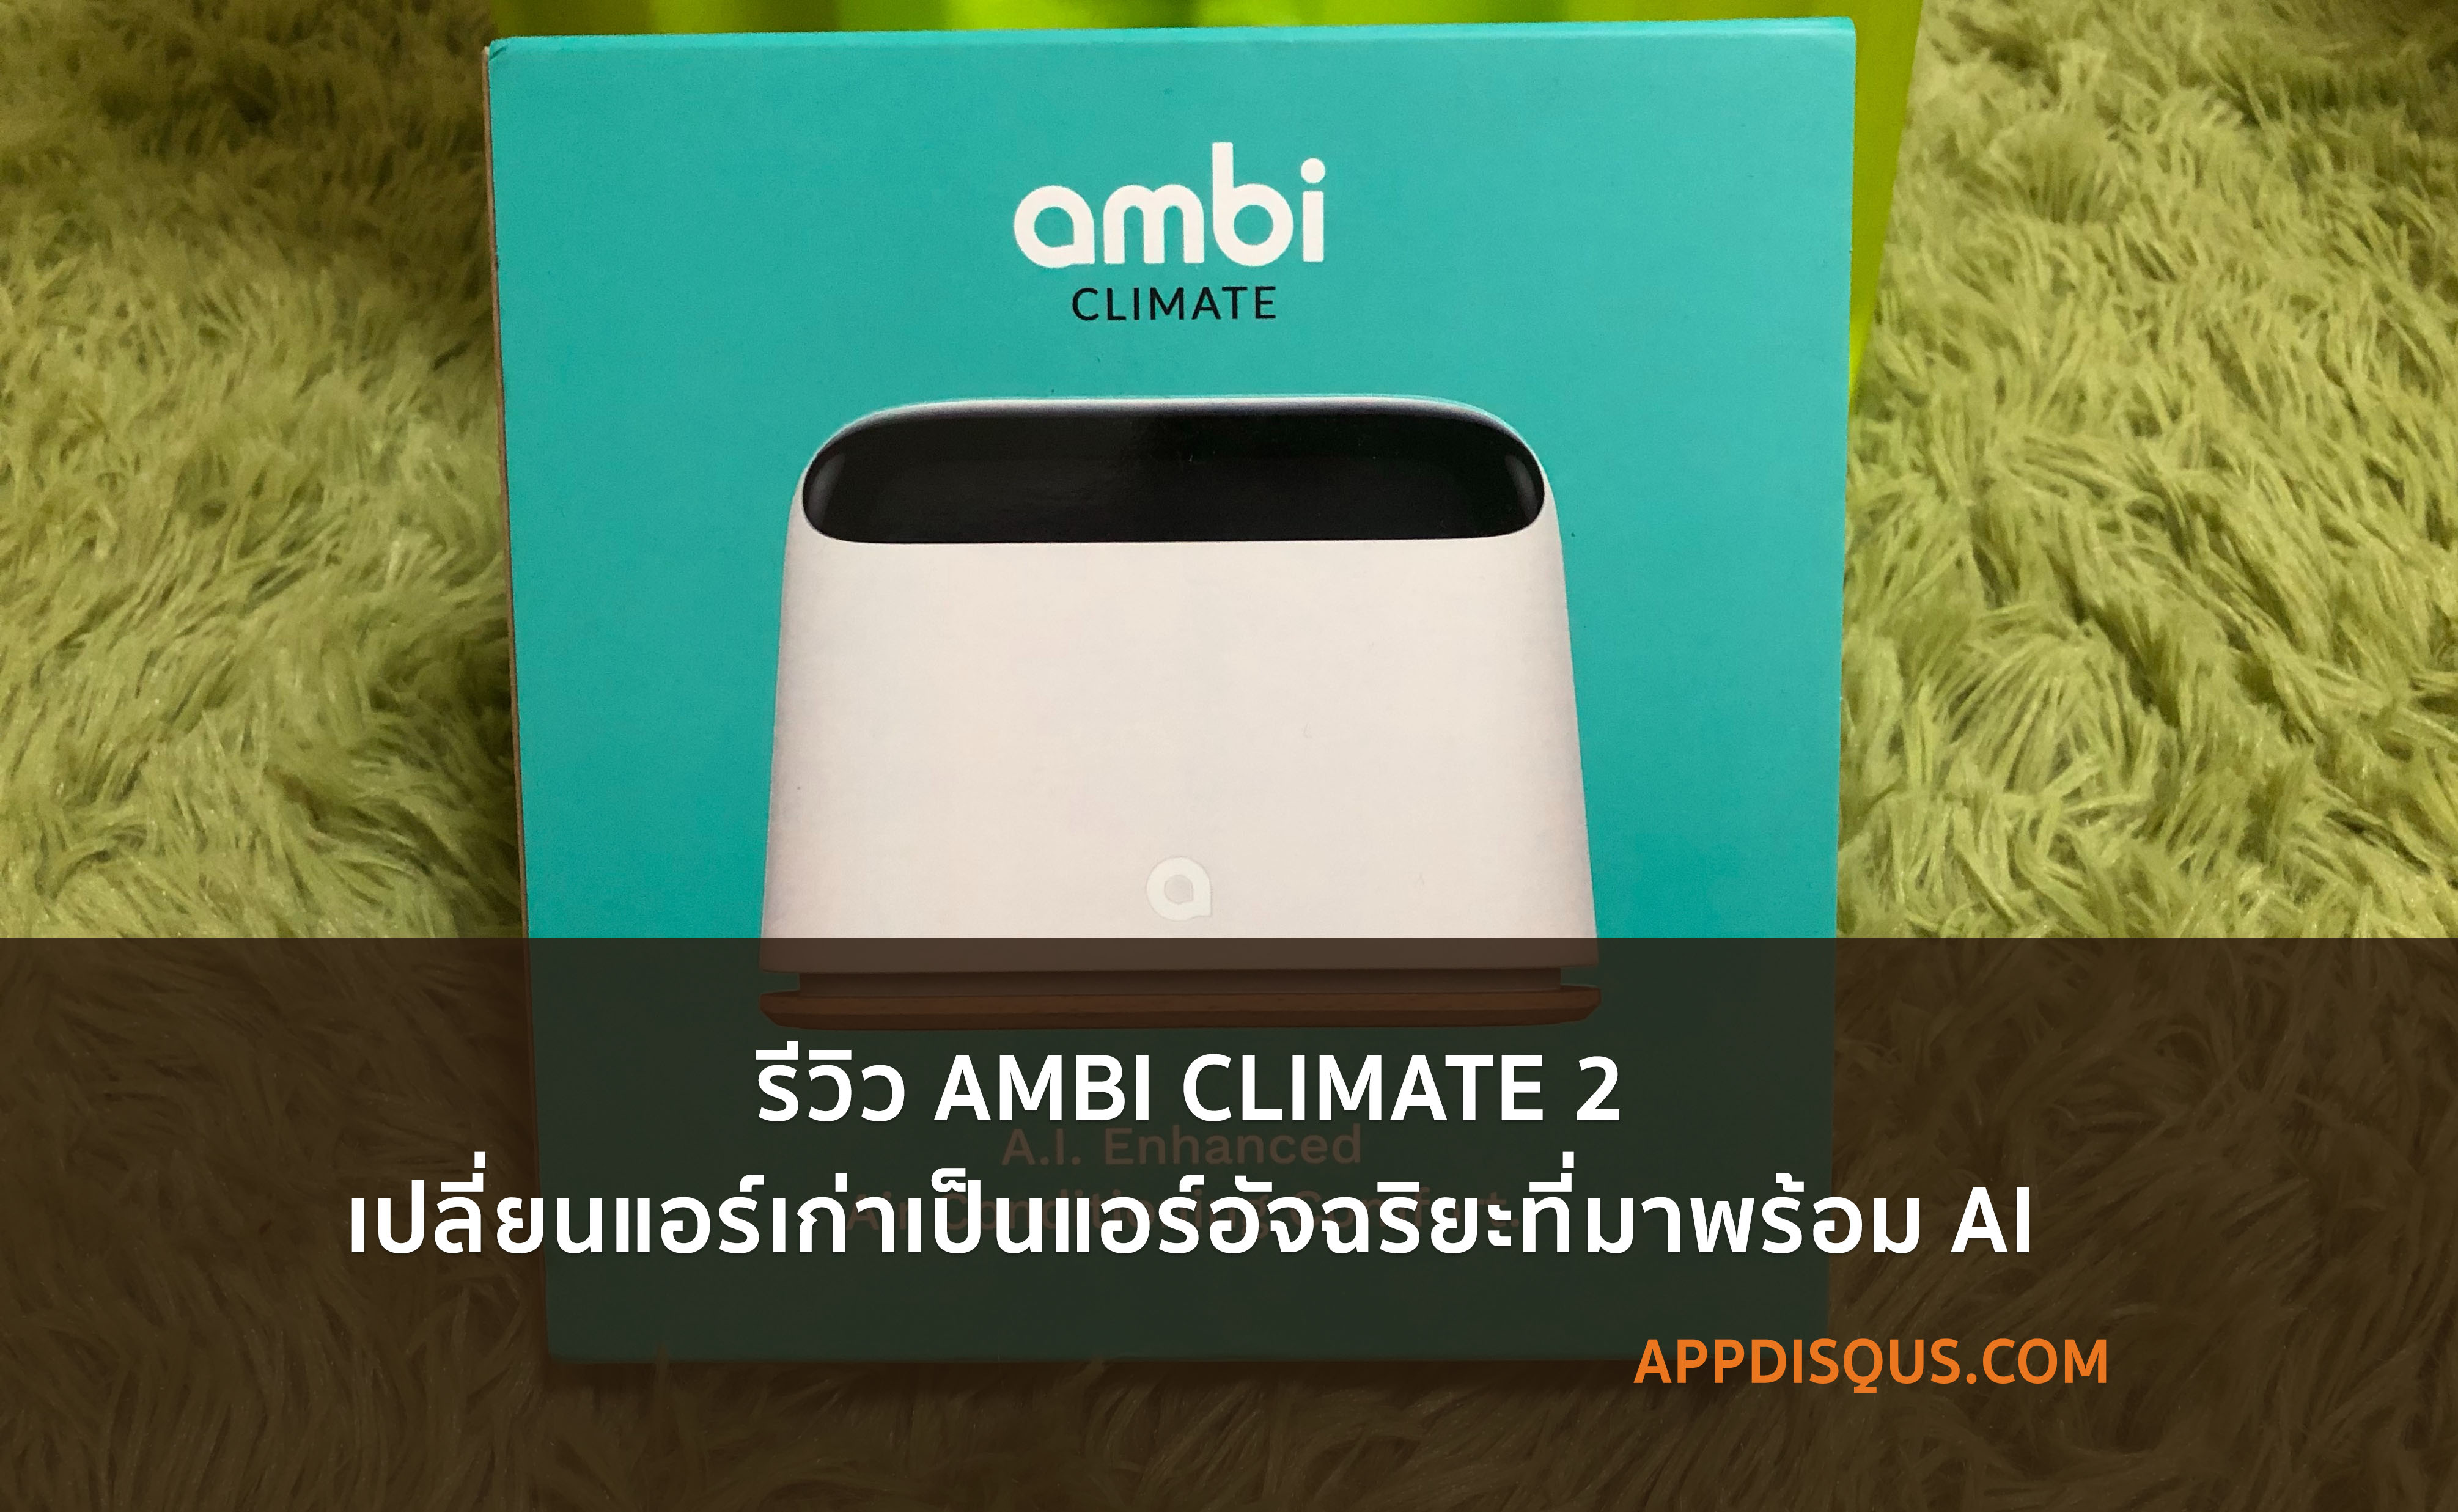 ambi climate 2 review cover | AI | รีวิว Ambi Climate 2 มาเปลี่ยนแอร์แก่ๆ ให้กลายเป็นแอร์อัจฉริยะมี AI กัน